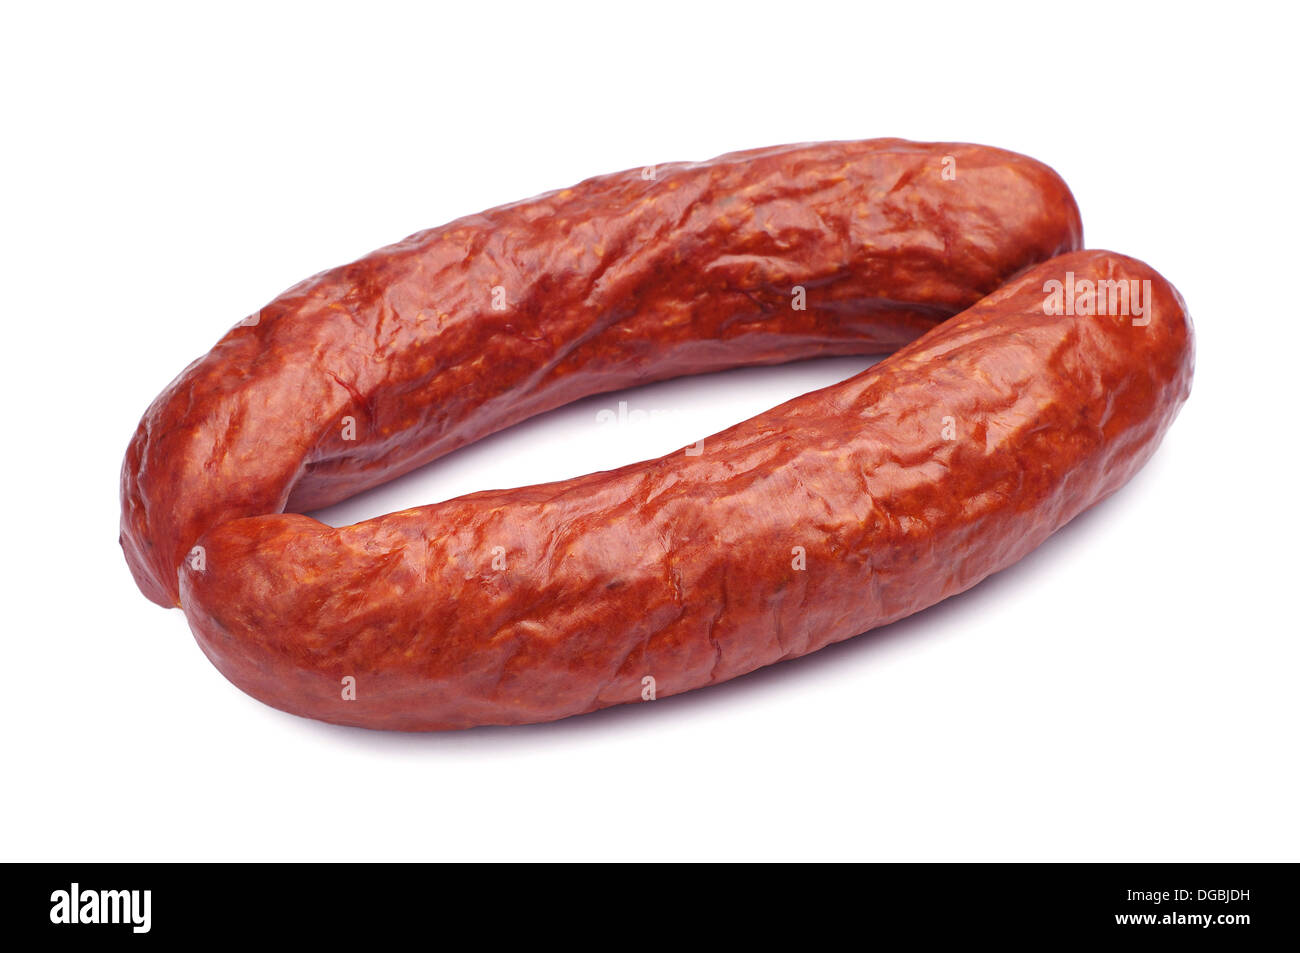 Smoked sausage on a white background Stock Photo